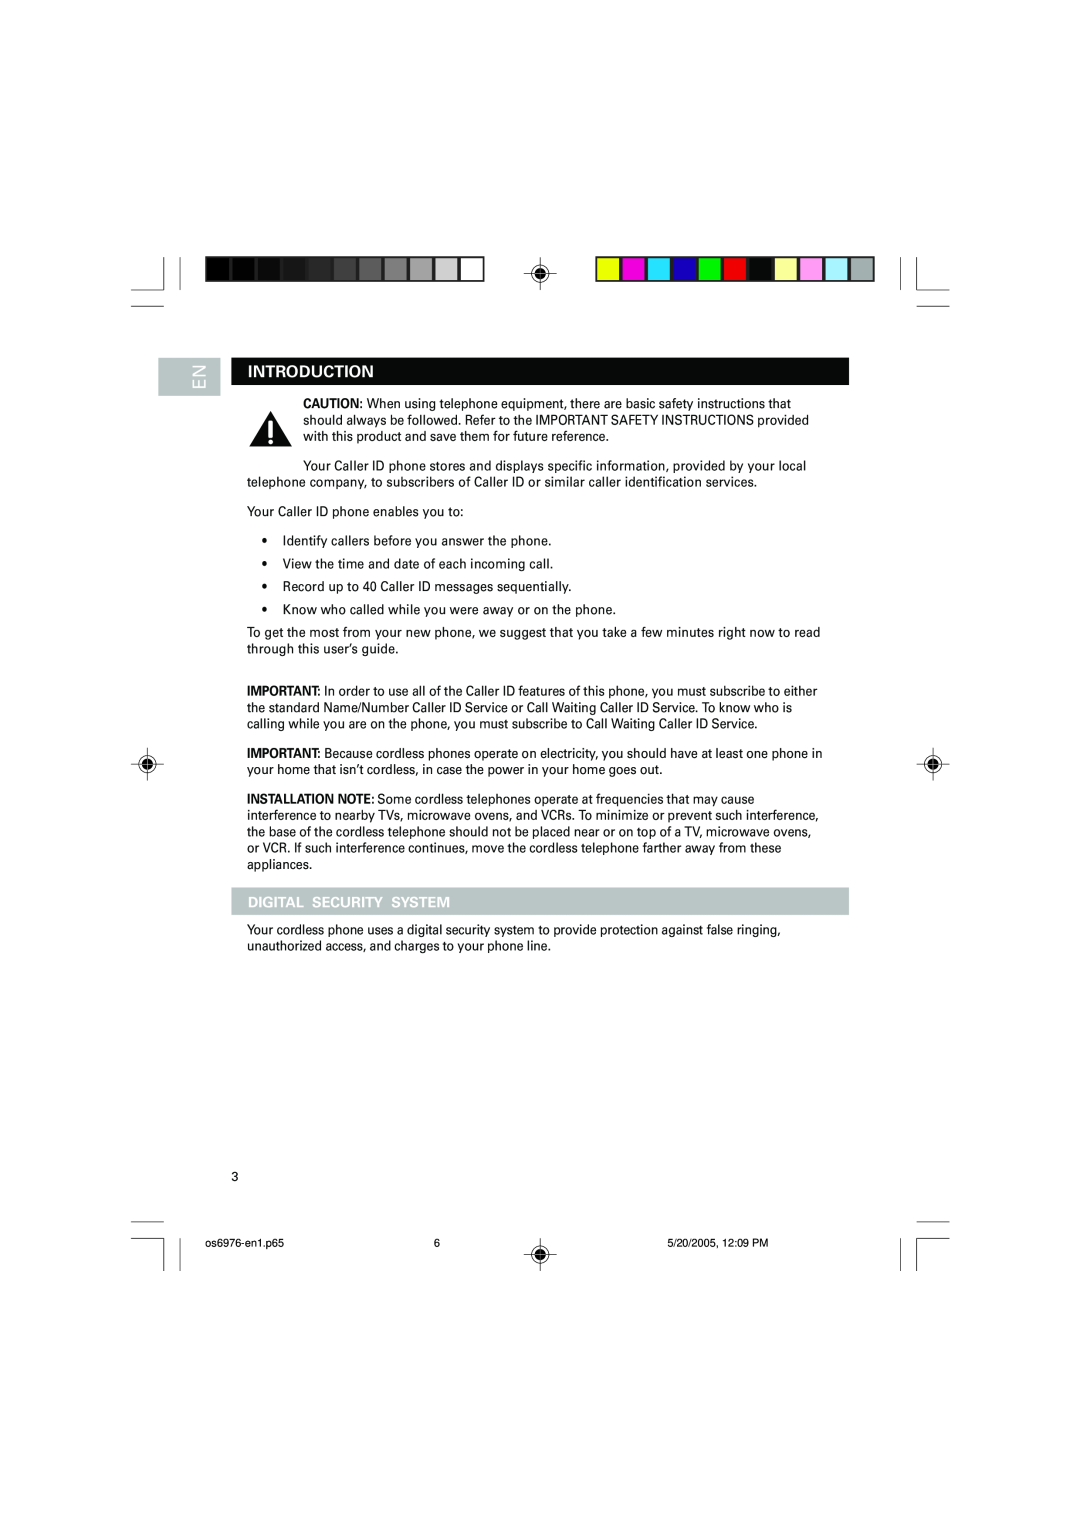 Oregon Scientific OS6976 user manual Introduction, Digital Security System 